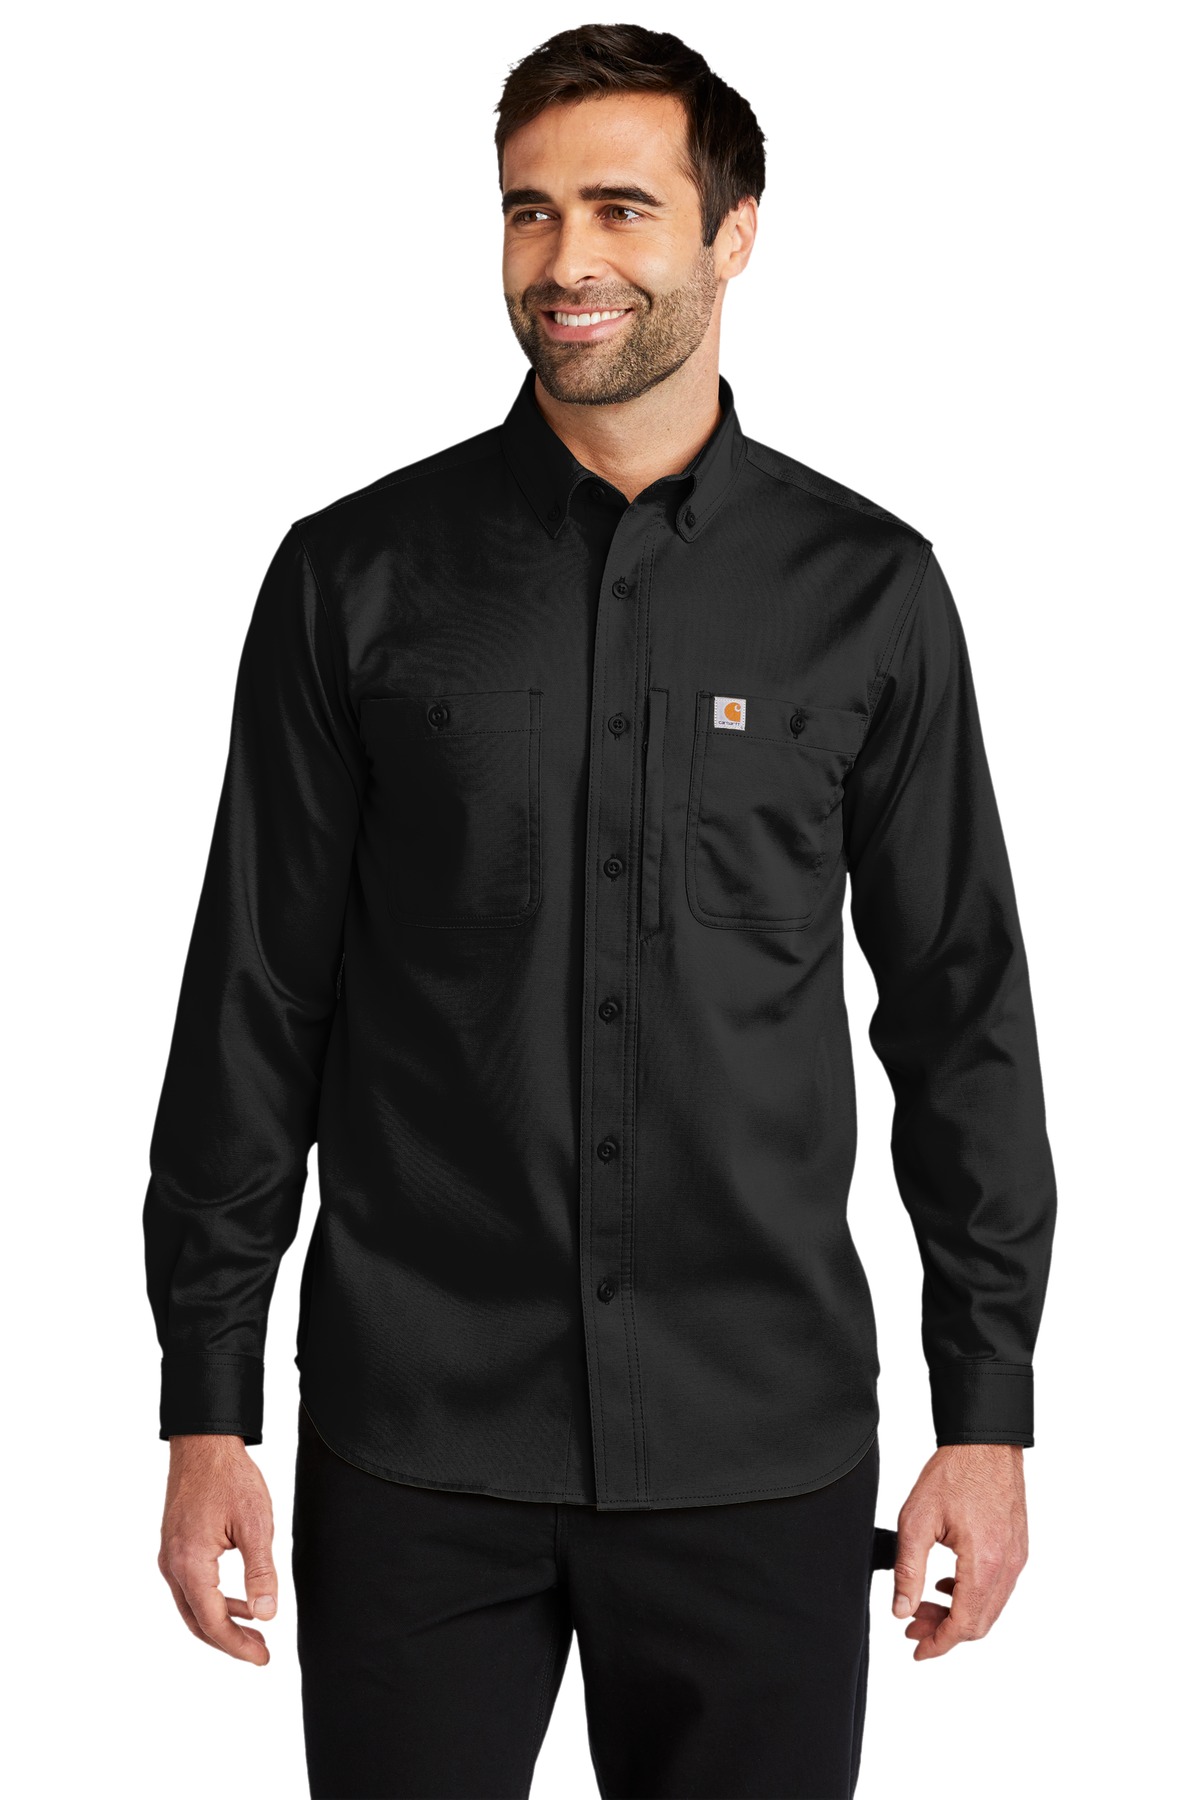 Carhartt Rugged Professional Series Long Sleeve Shirt...